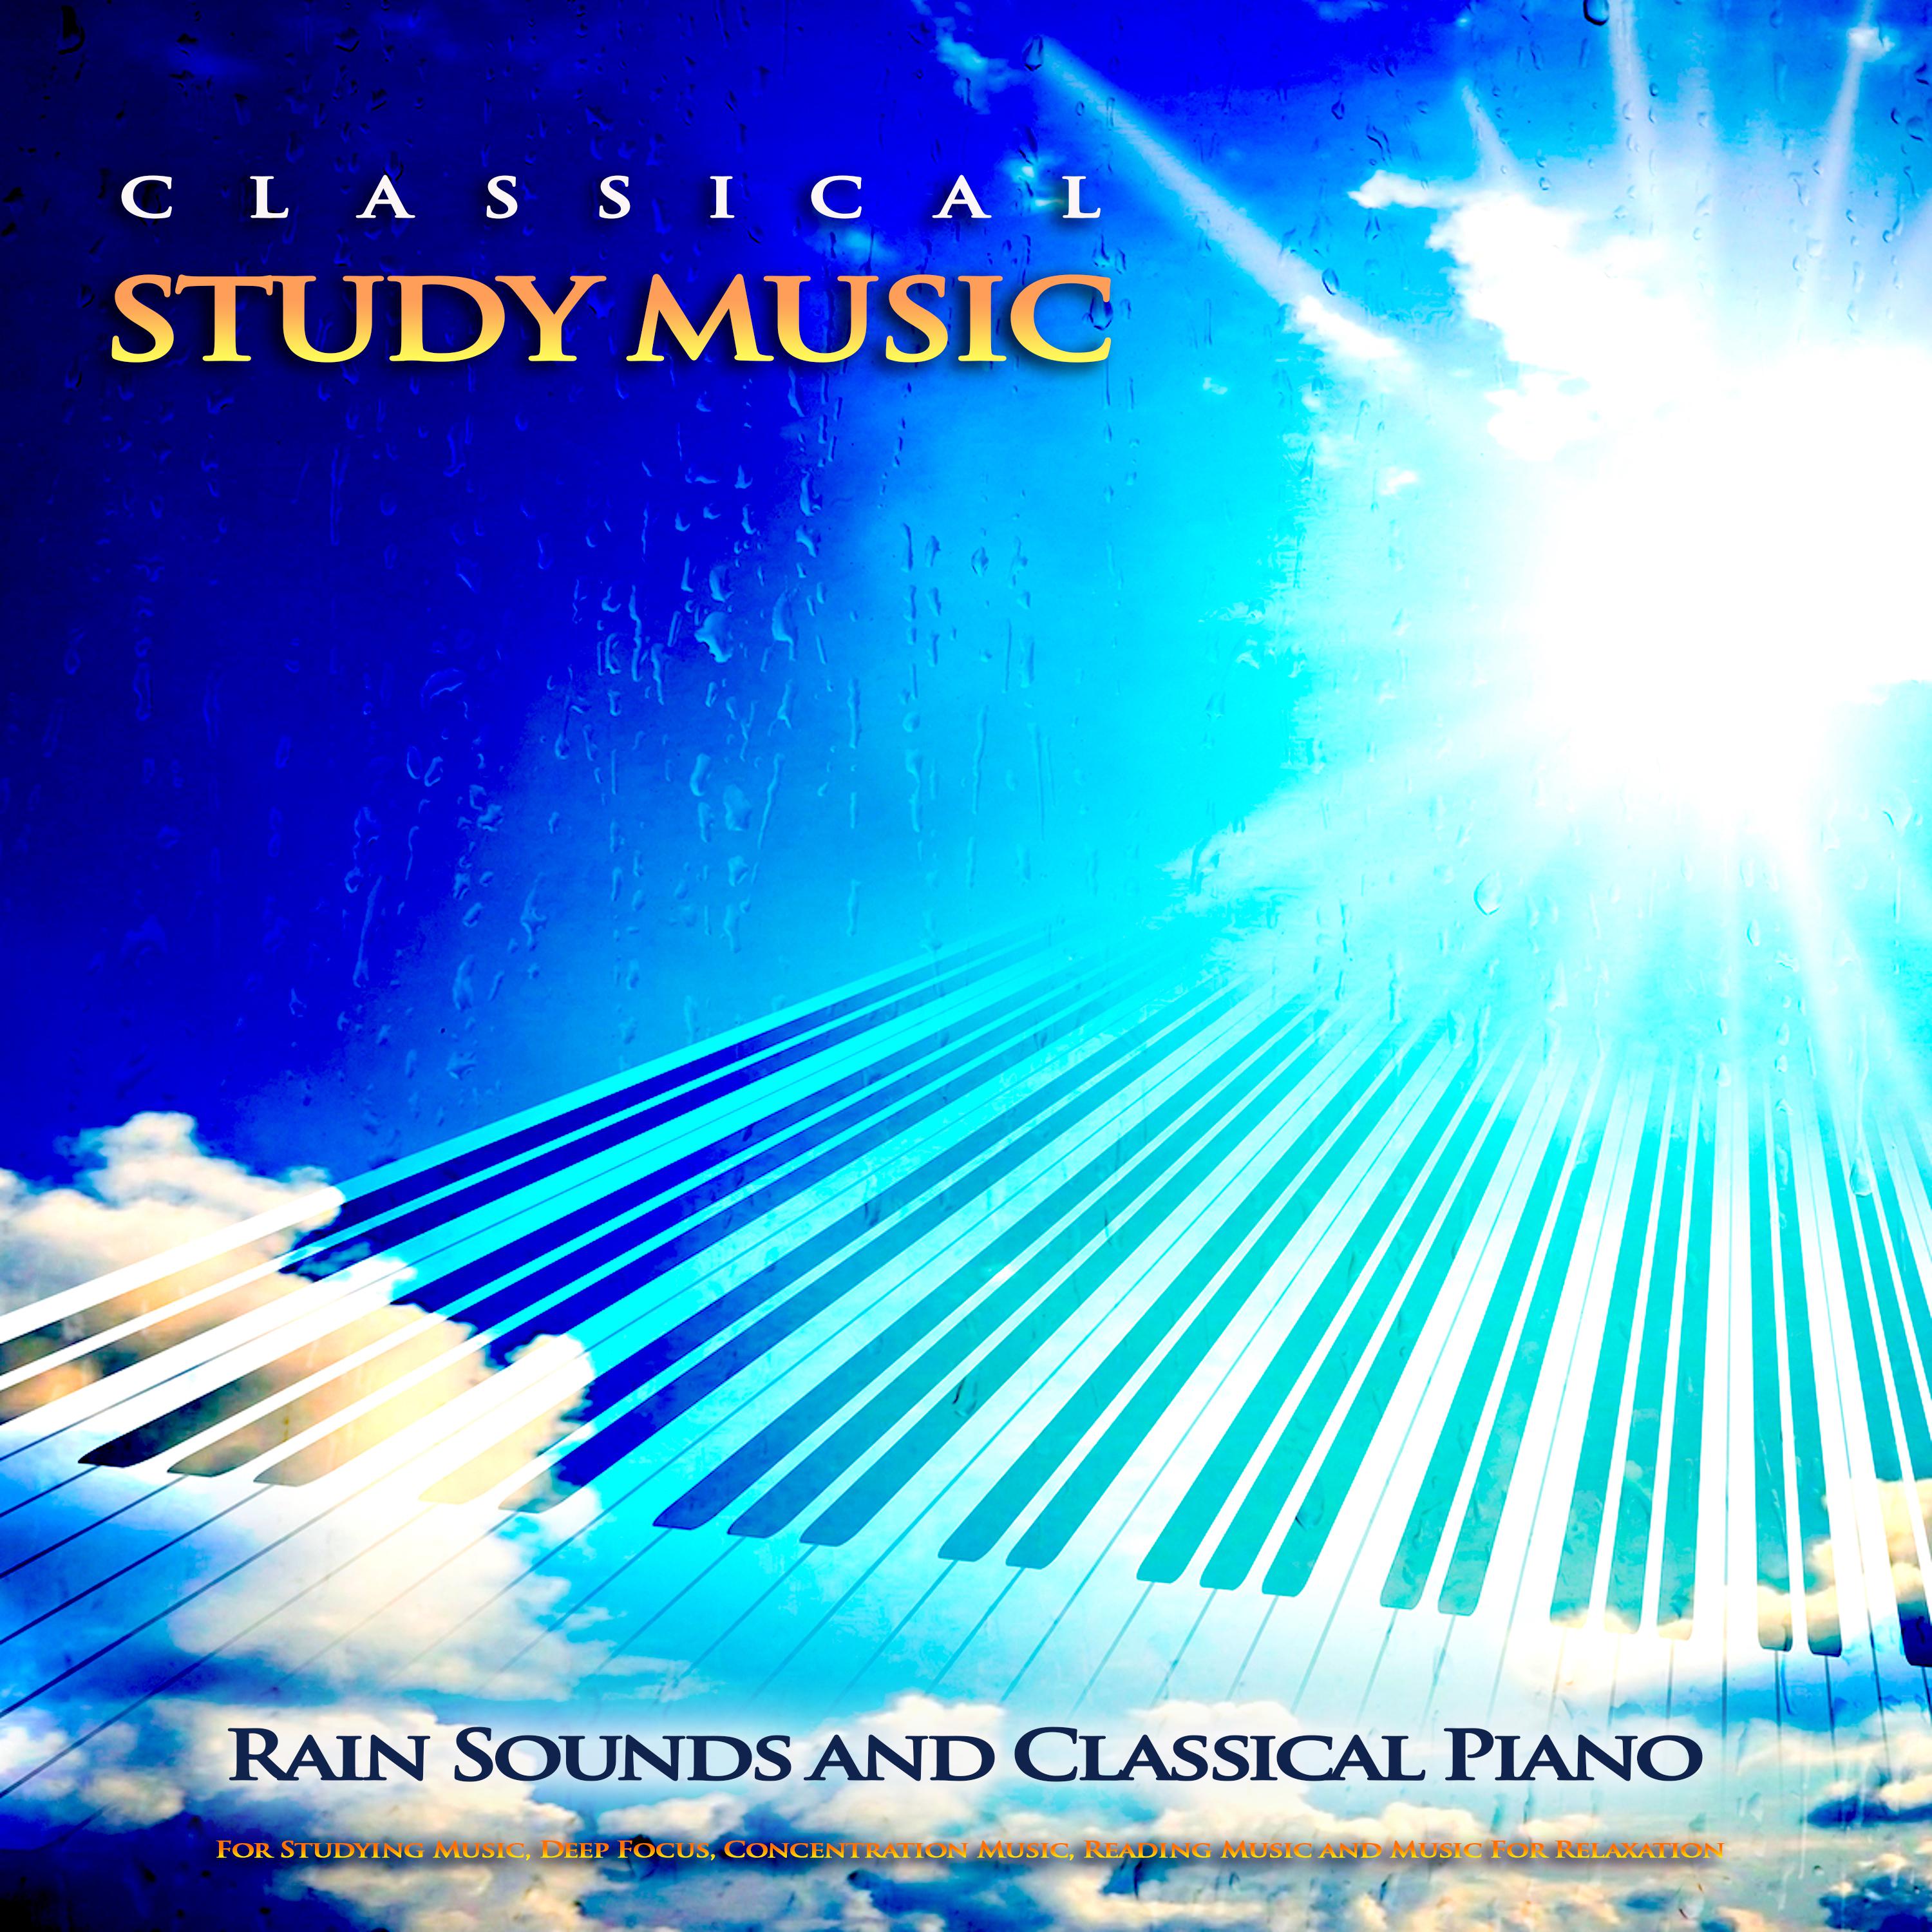 Venetian Gondolas - Mendelssohn - Classical Piano Music and Rain Sounds - Classical Studying Music